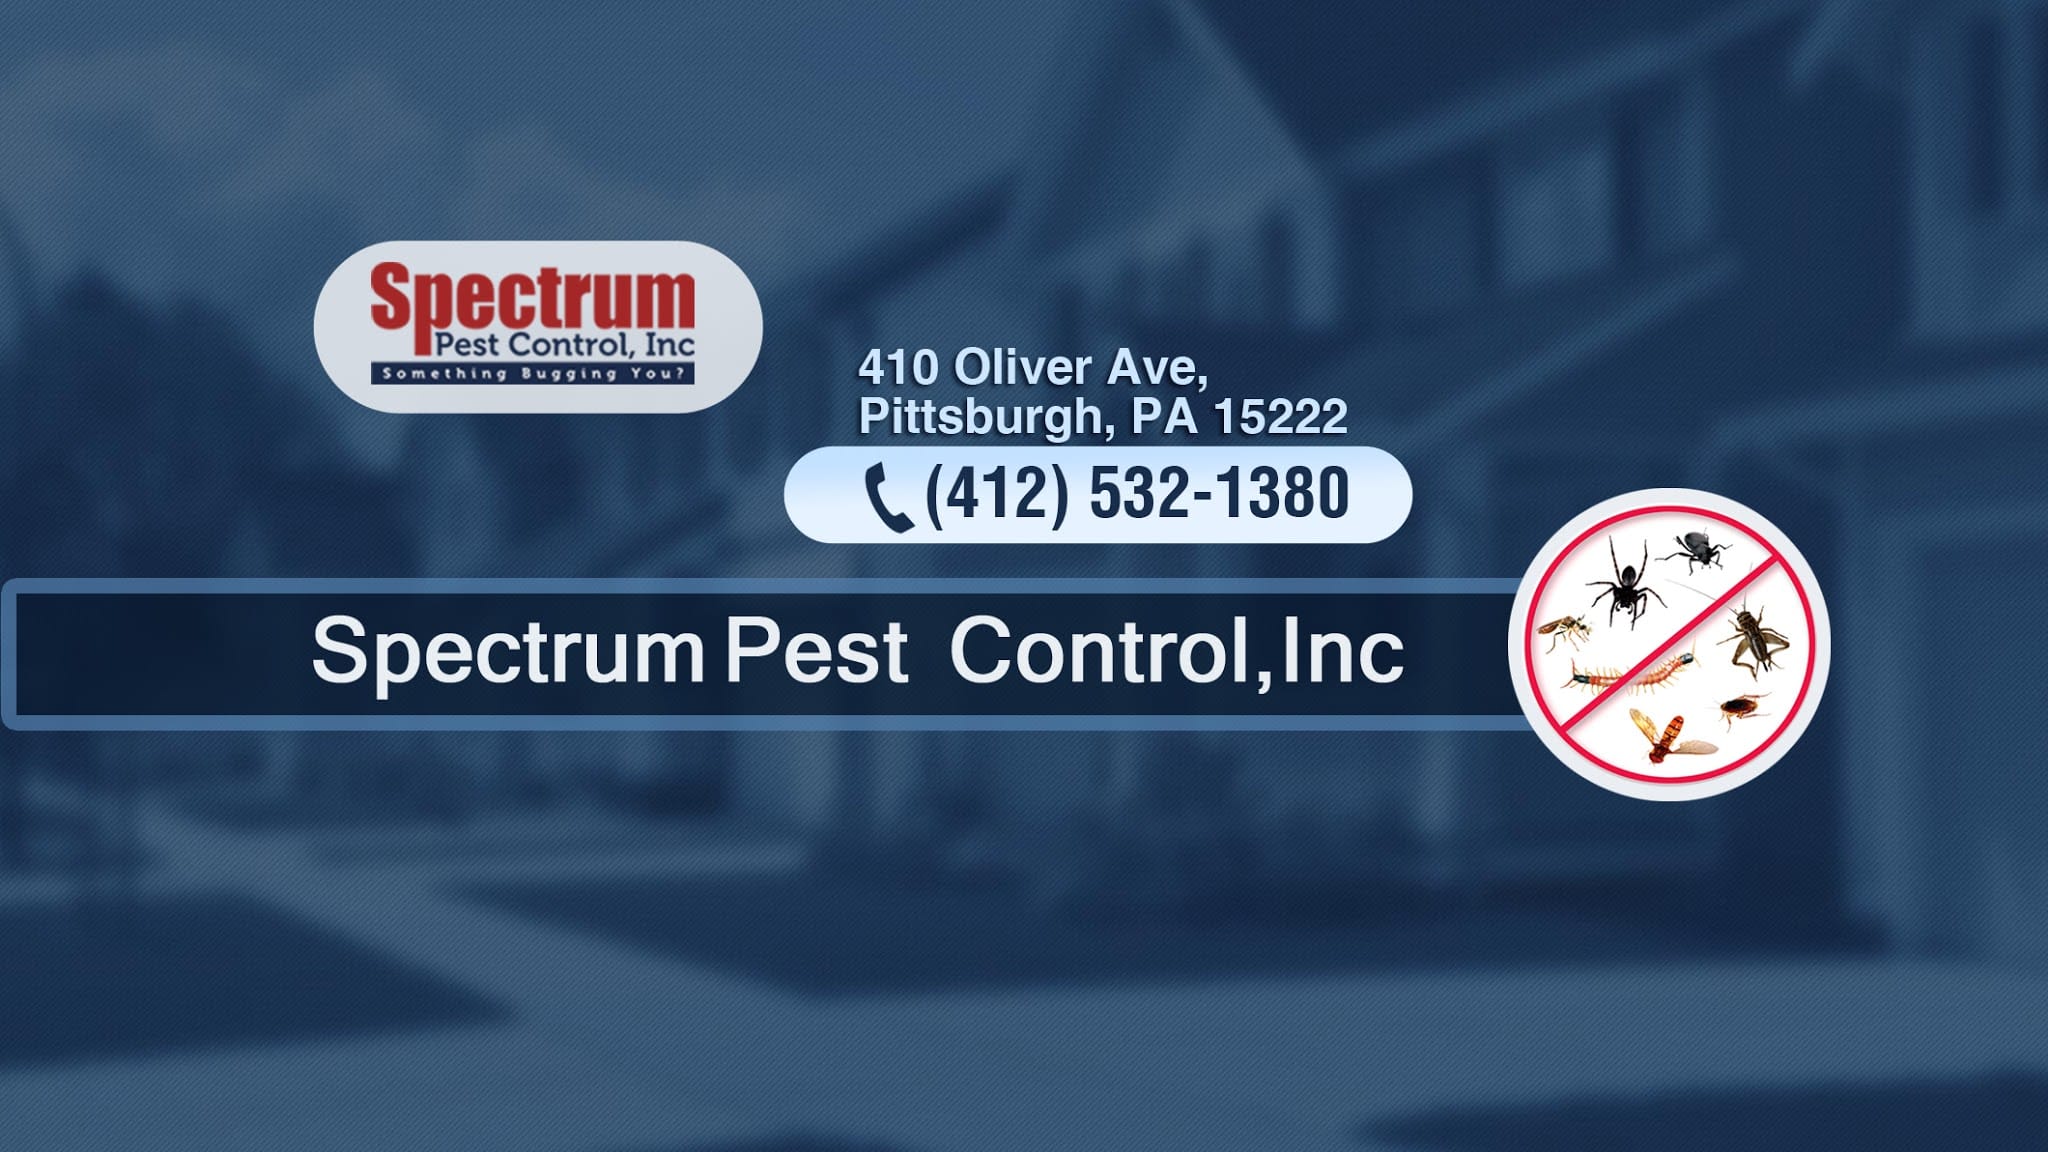 Spectrum Pest Control - Pittsburgh (PA 15219), US, rat exterminator